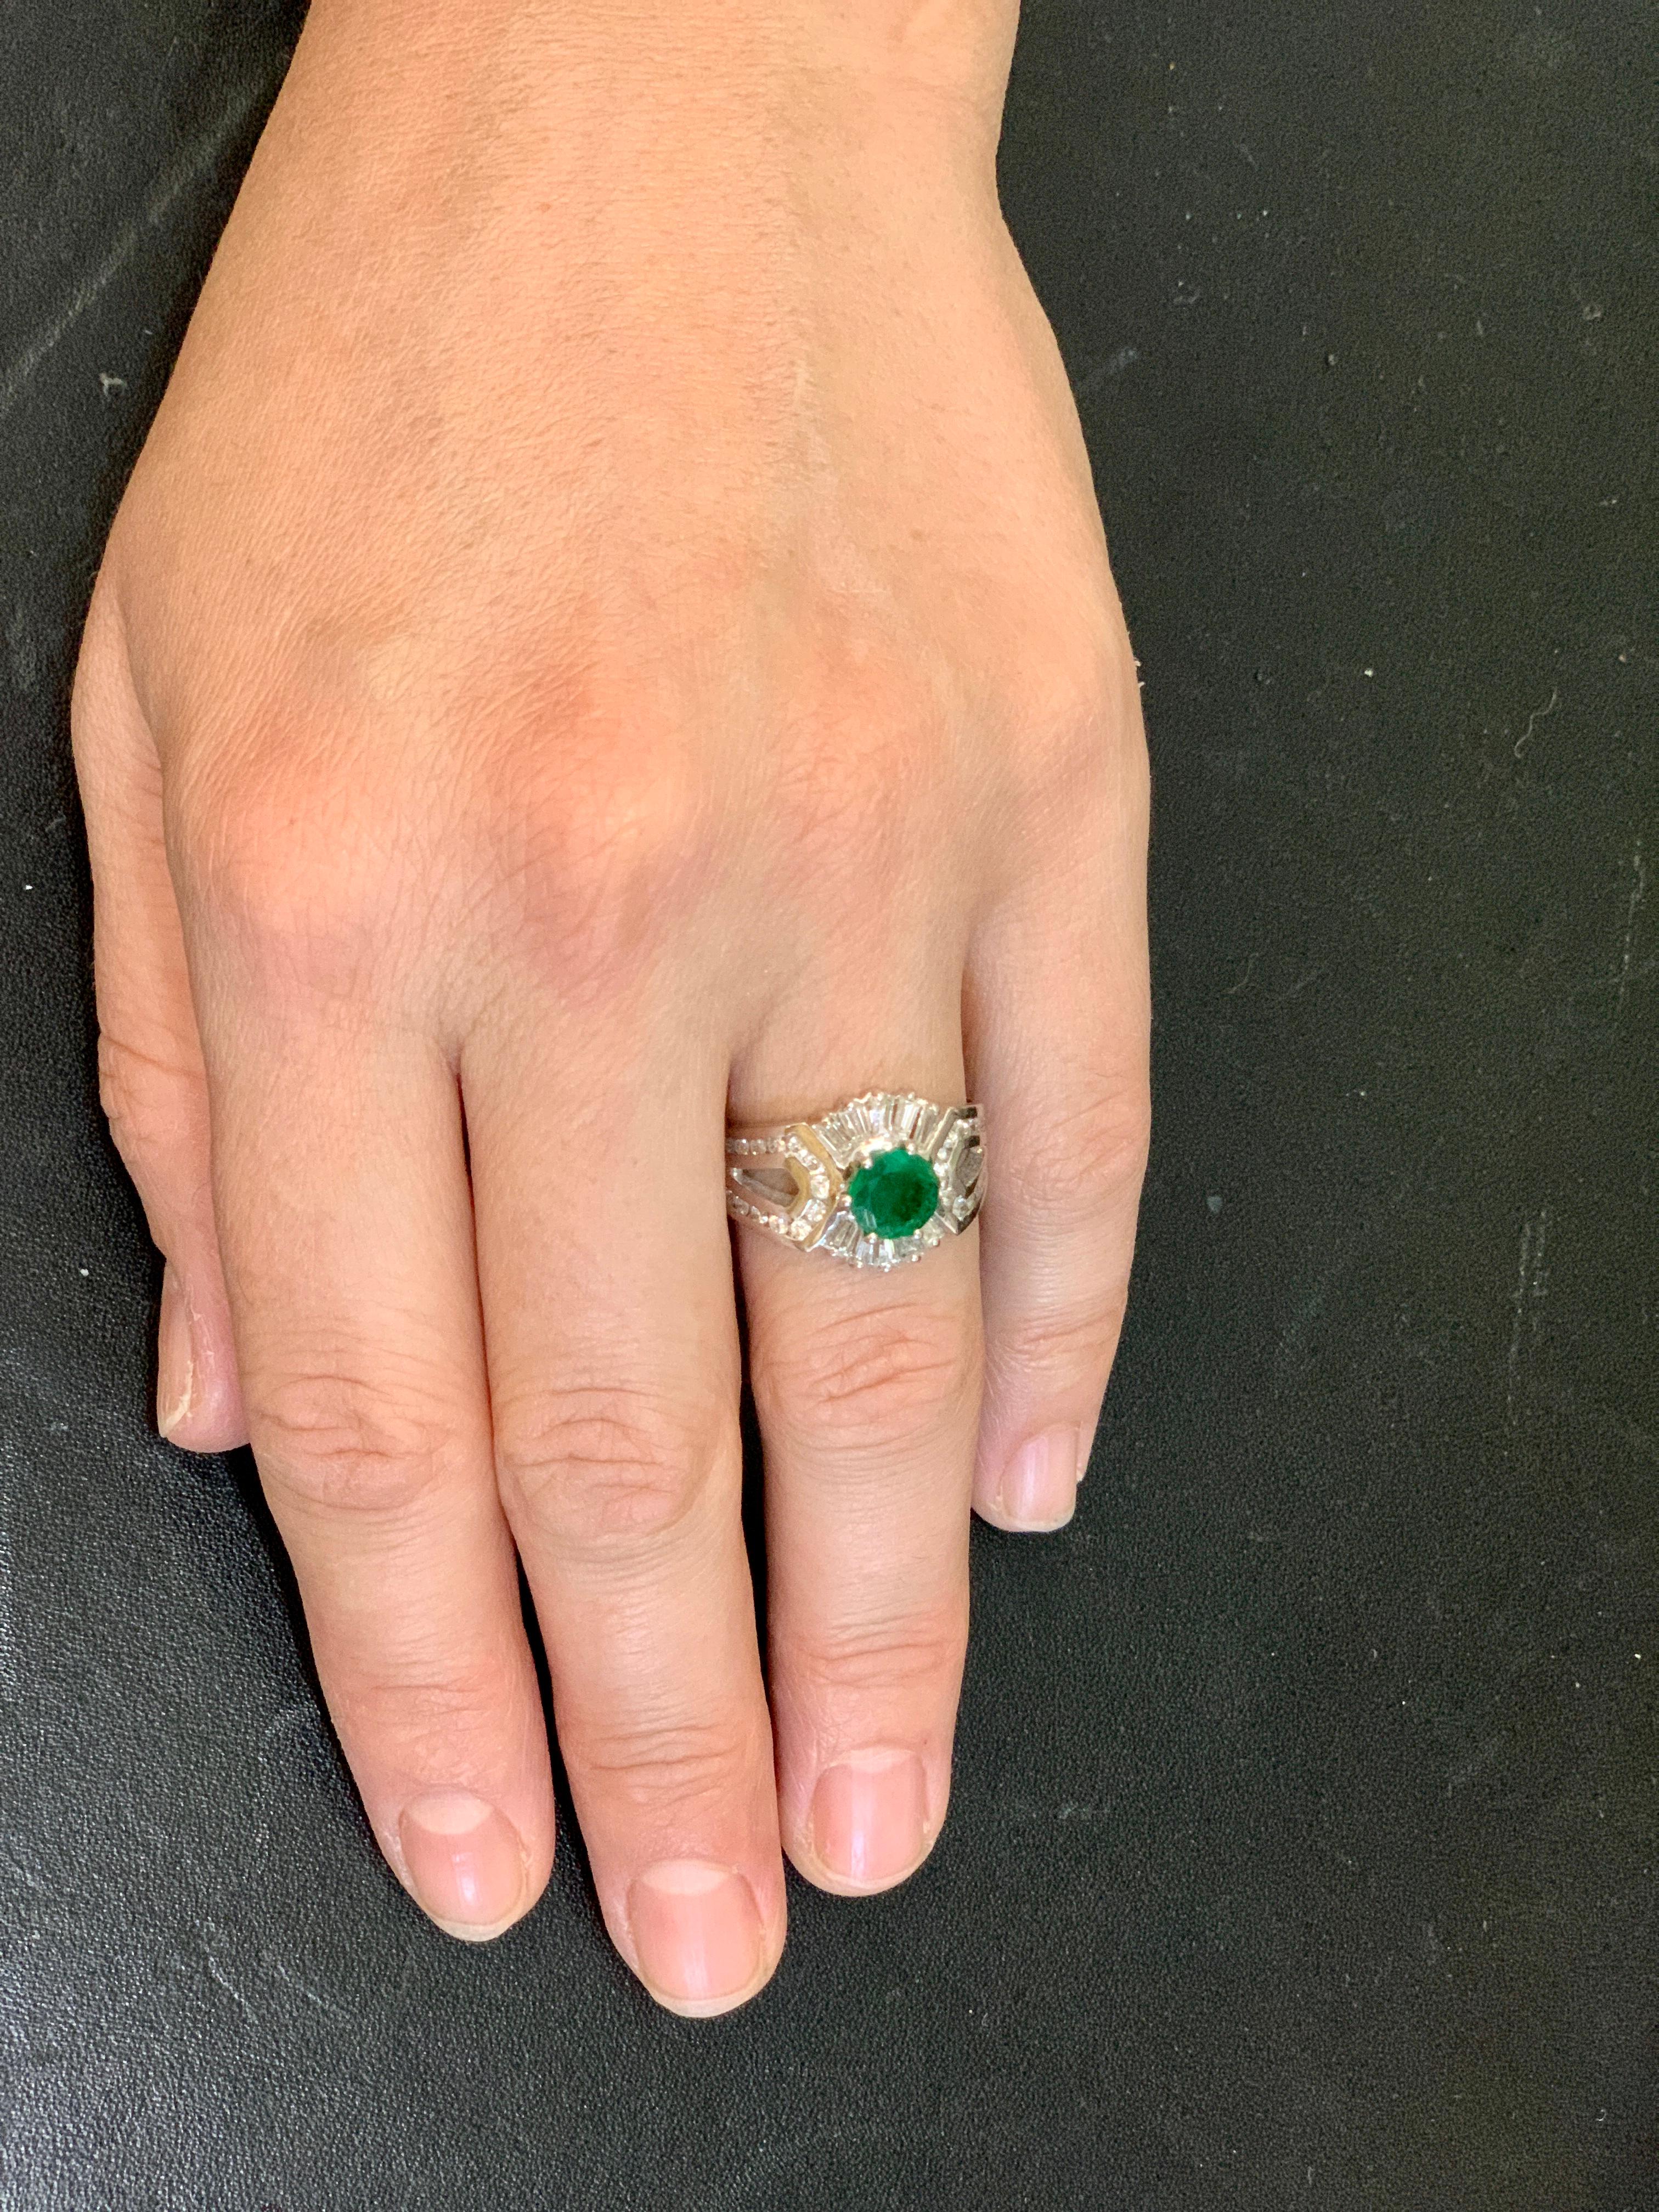 1.5 carat diamond ring emerald cut